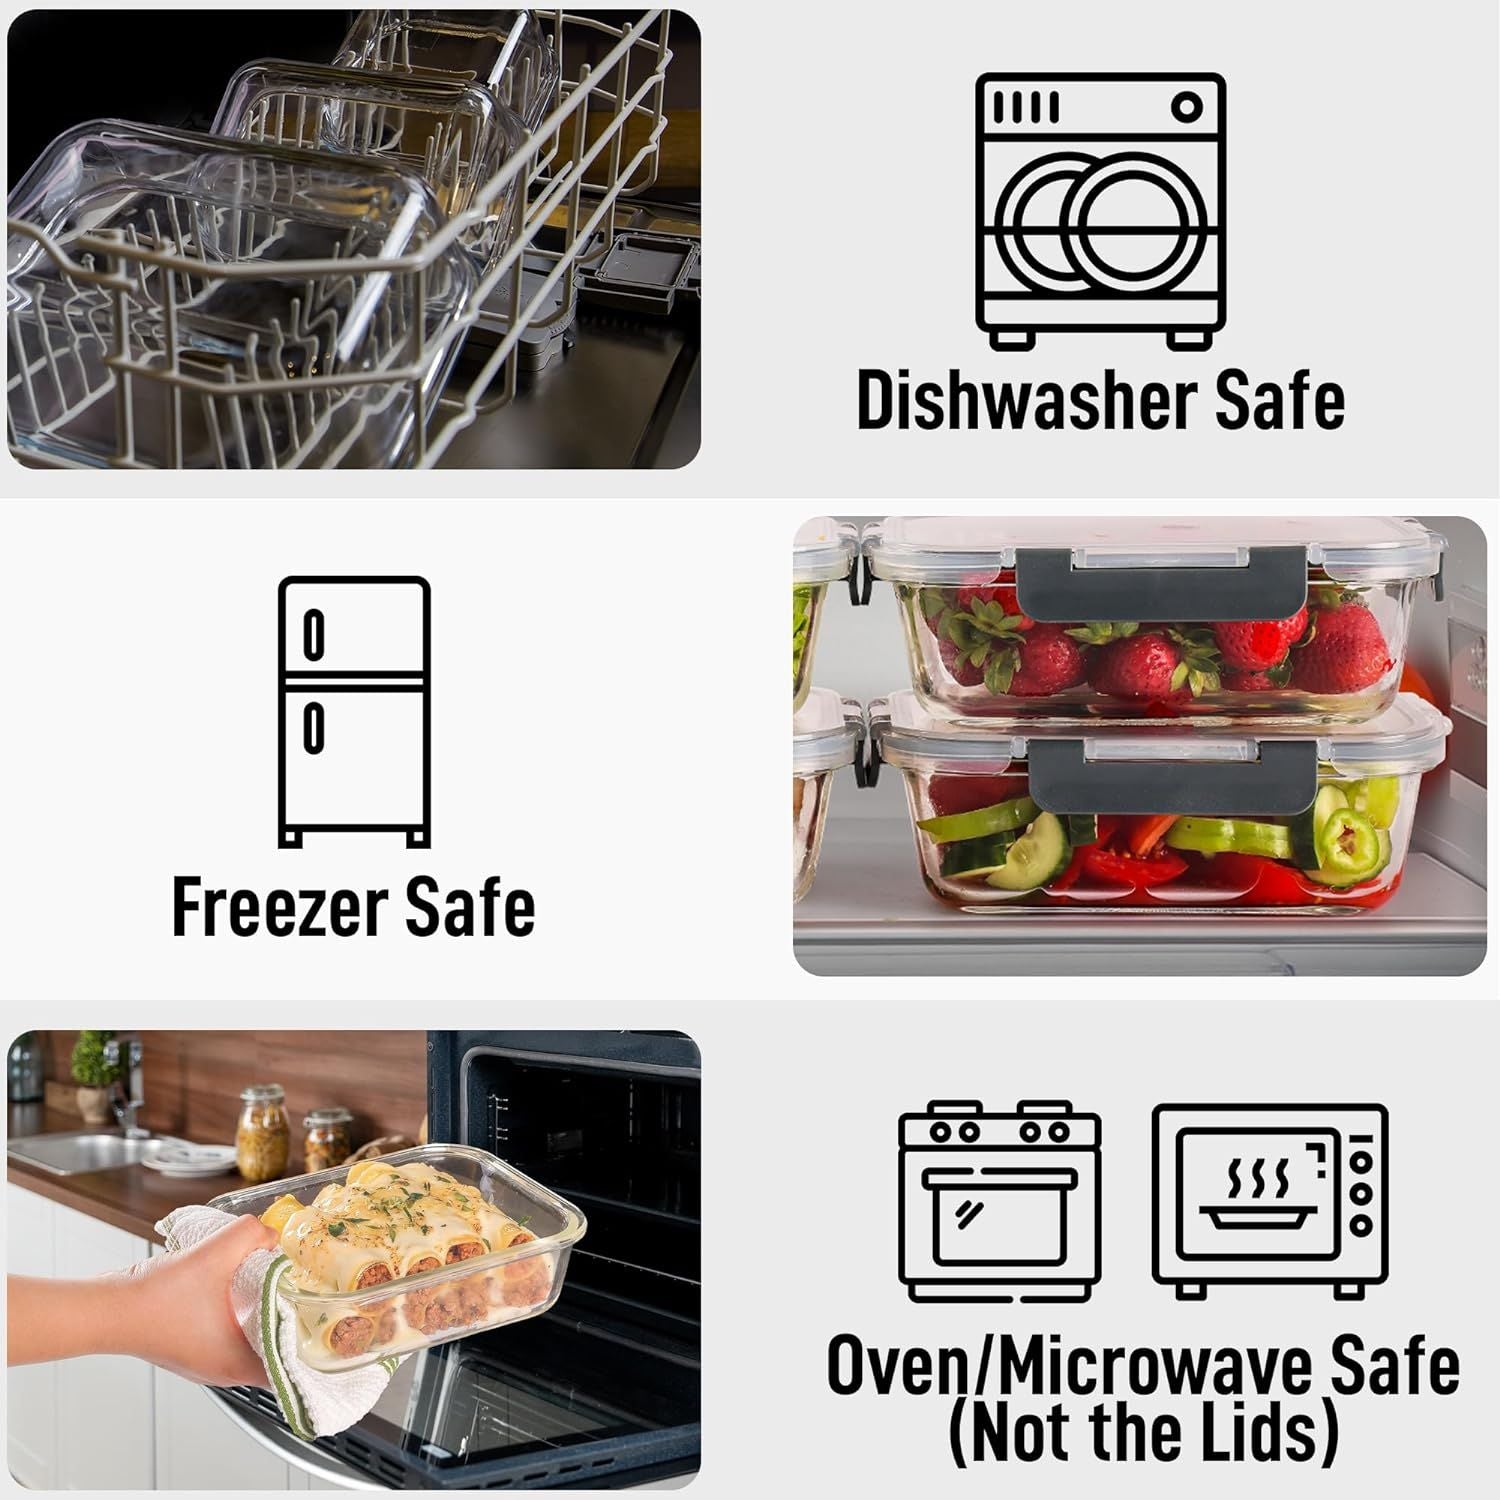 Is Tupperware Dishwasher-Safe?